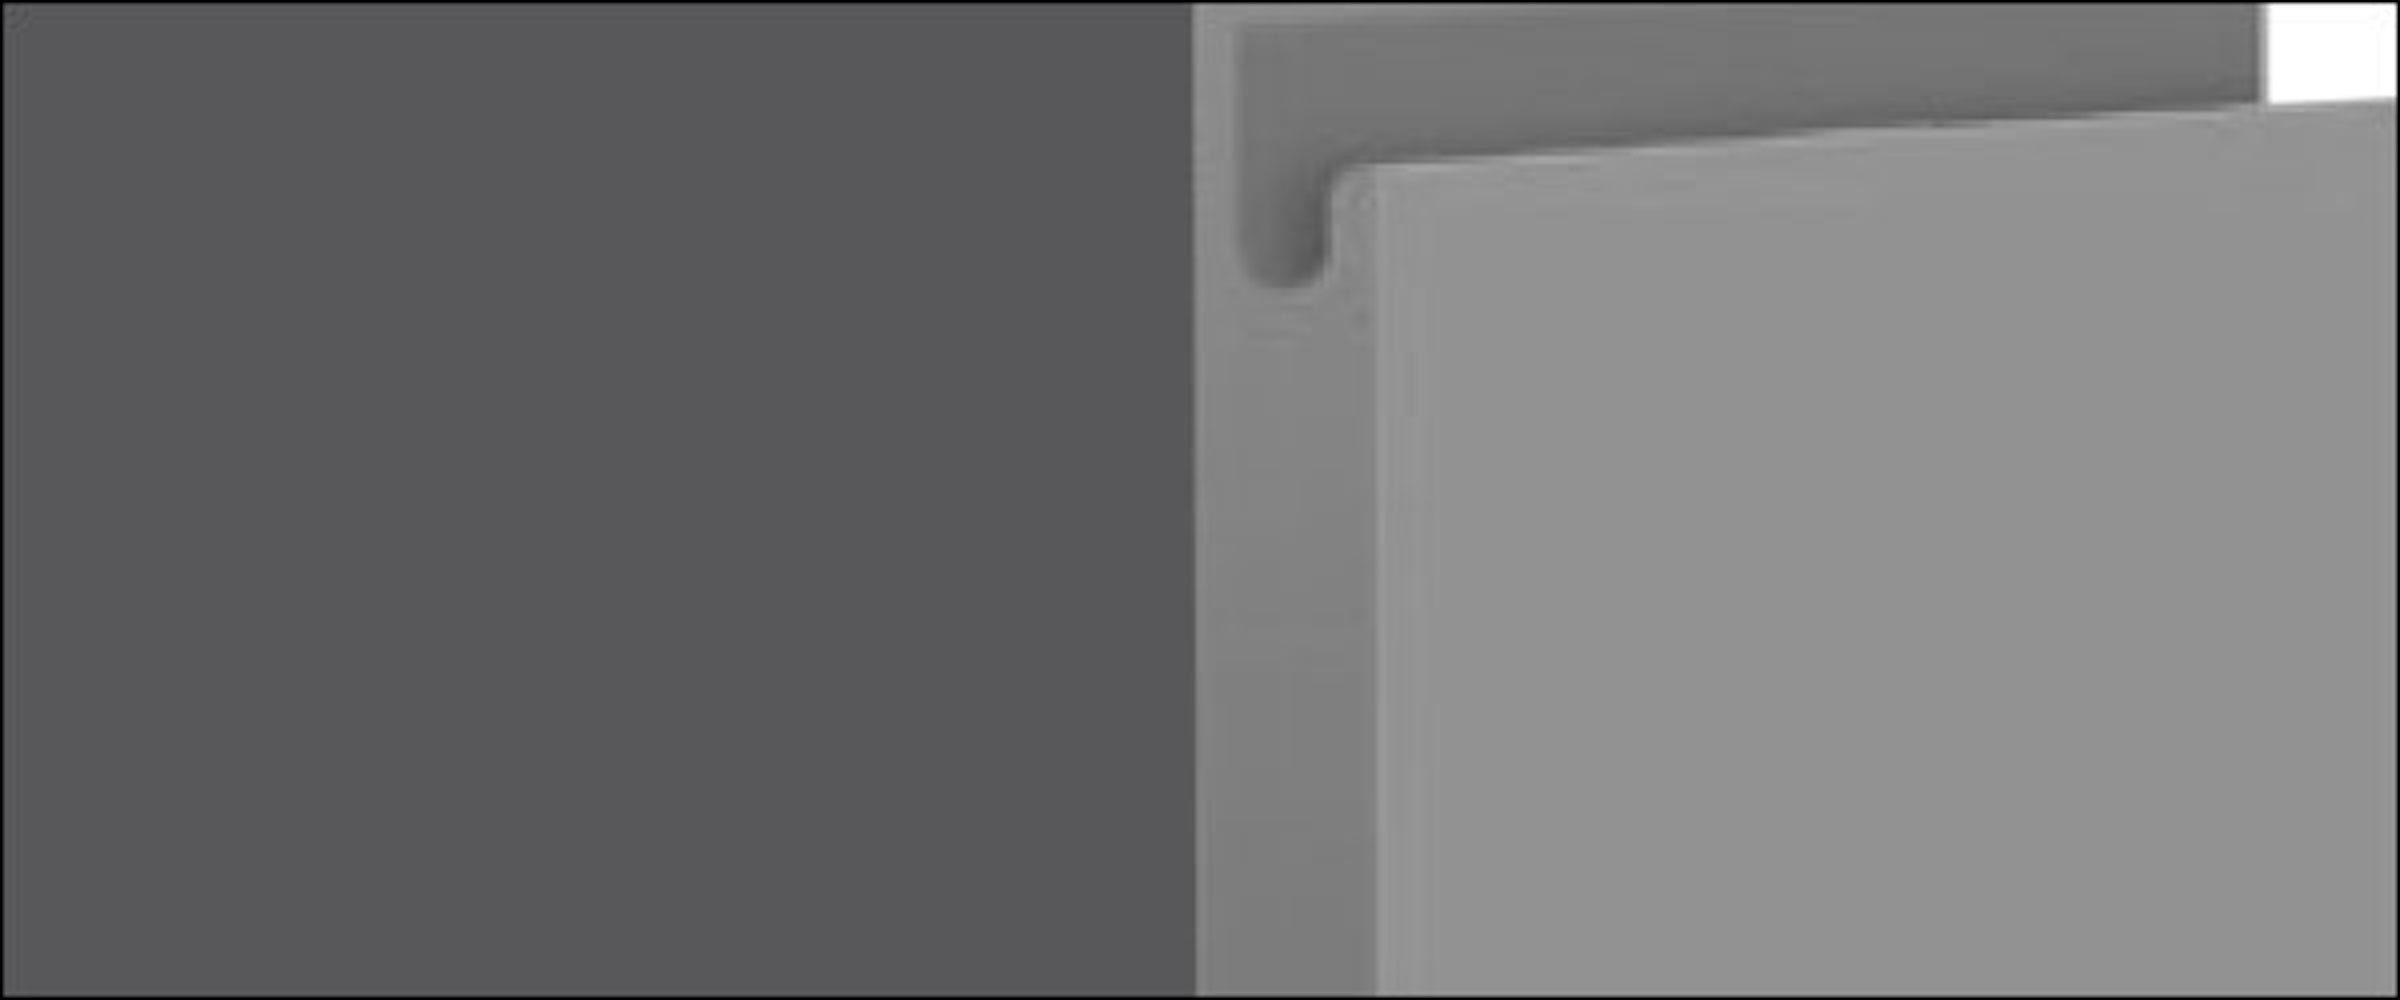 grifflos, und matt Klapphängeschrank Avellino Front- 2-türig Feldmann-Wohnen wählbar dust Korpusfarbe grey Acryl 90cm